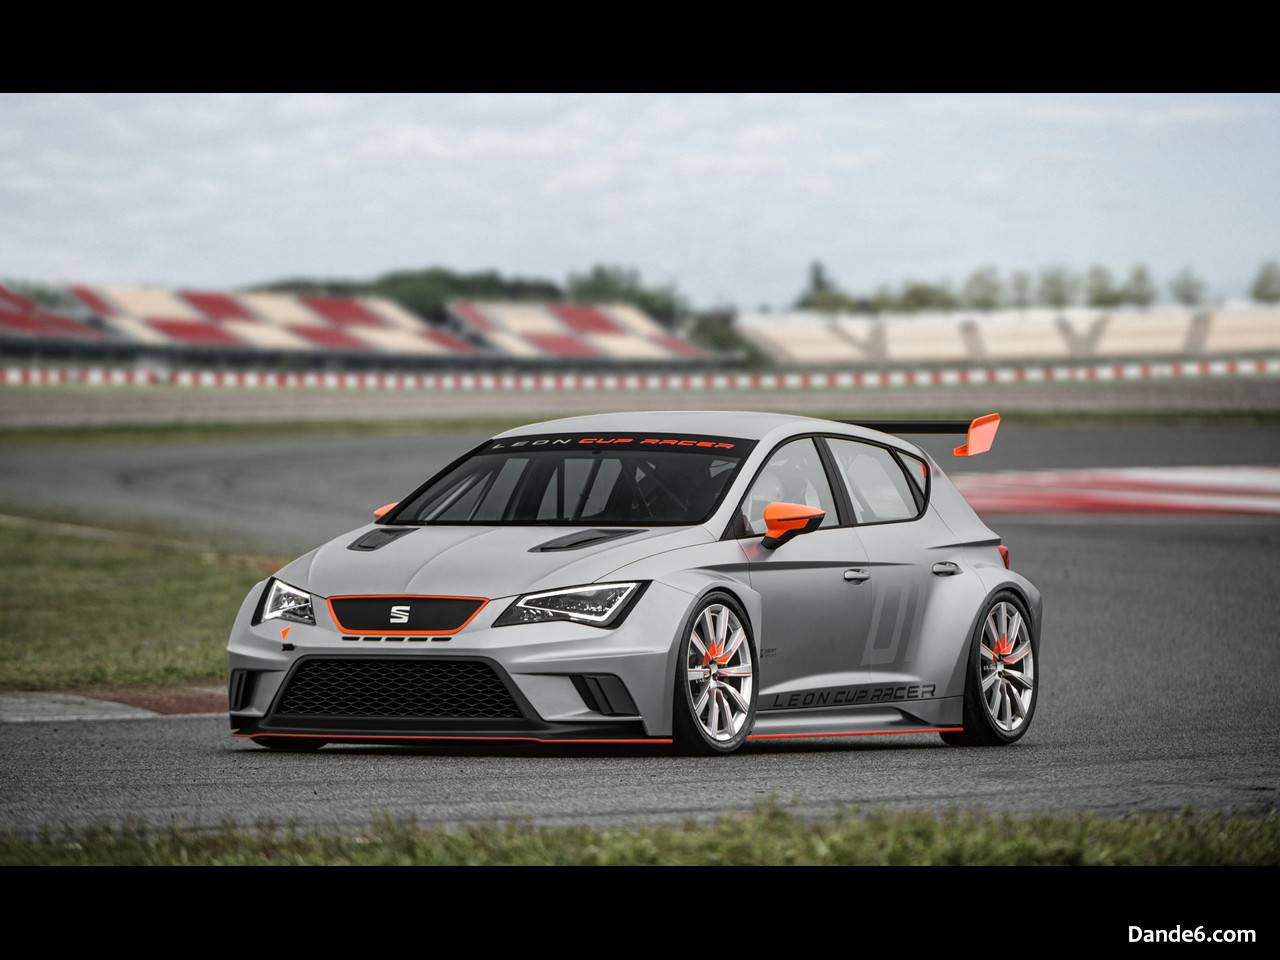 2013 SEAT Leon Cup Racer Concept